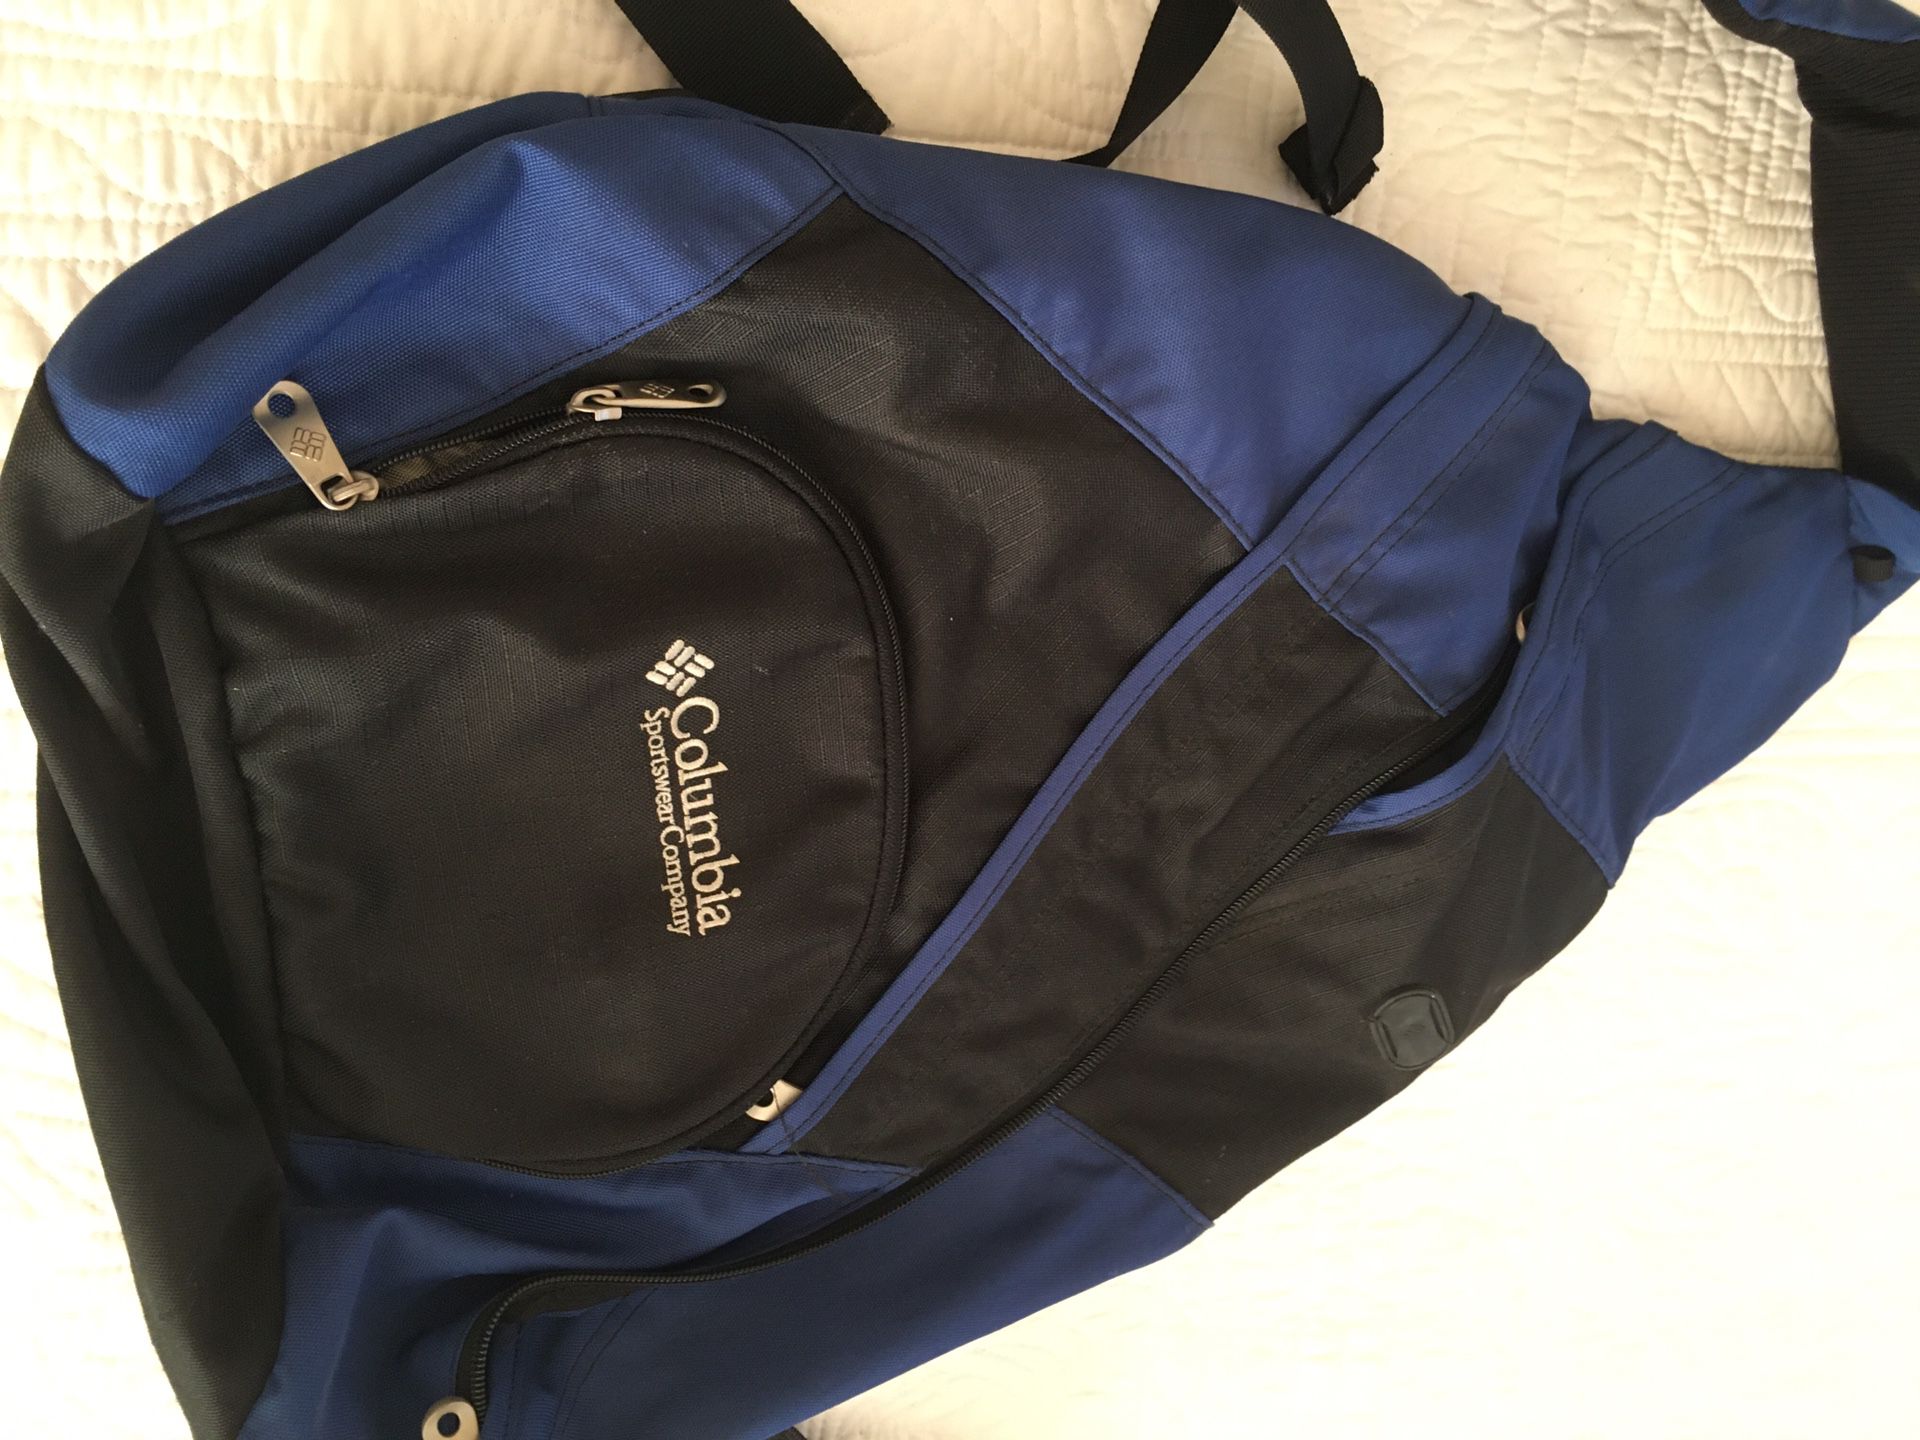 Columbia sling pack backpack